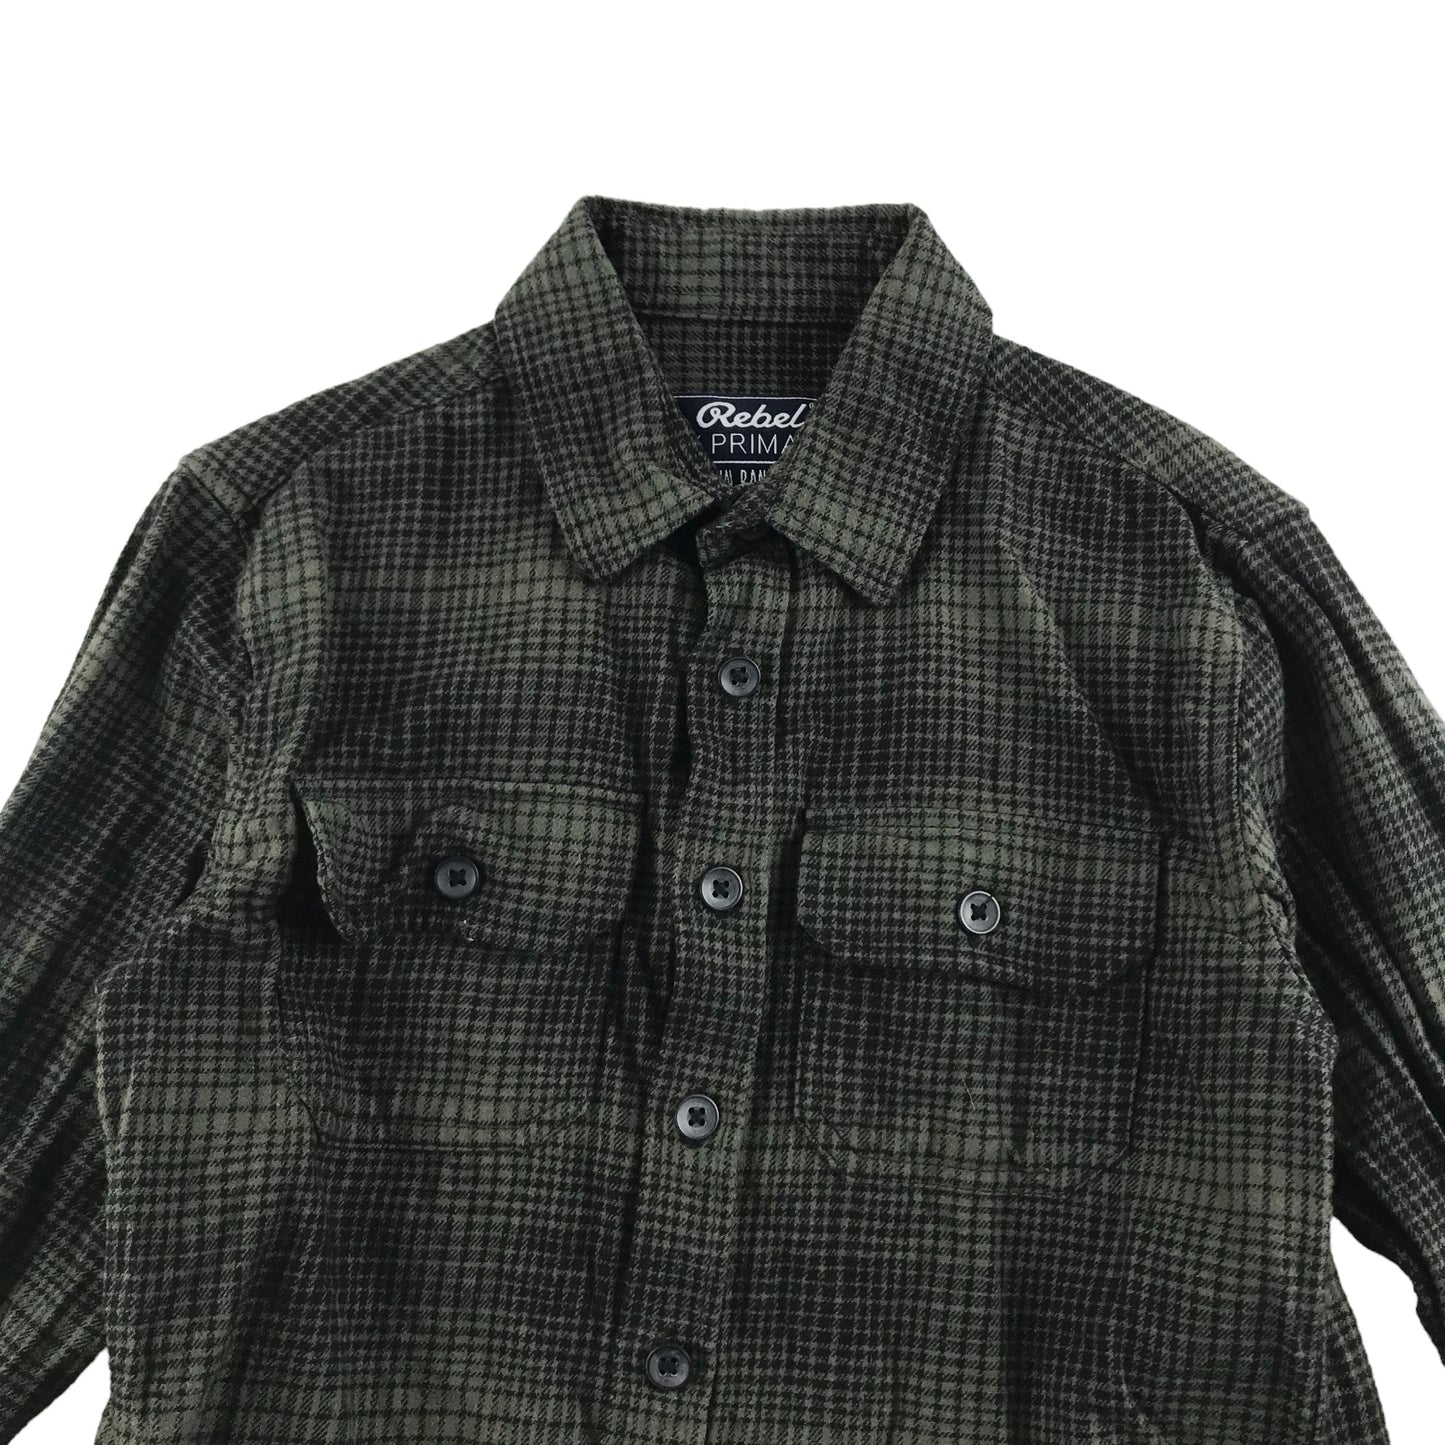 Primark Shirt Age 7 Khaki Green Check Pattern Button Up Cotton